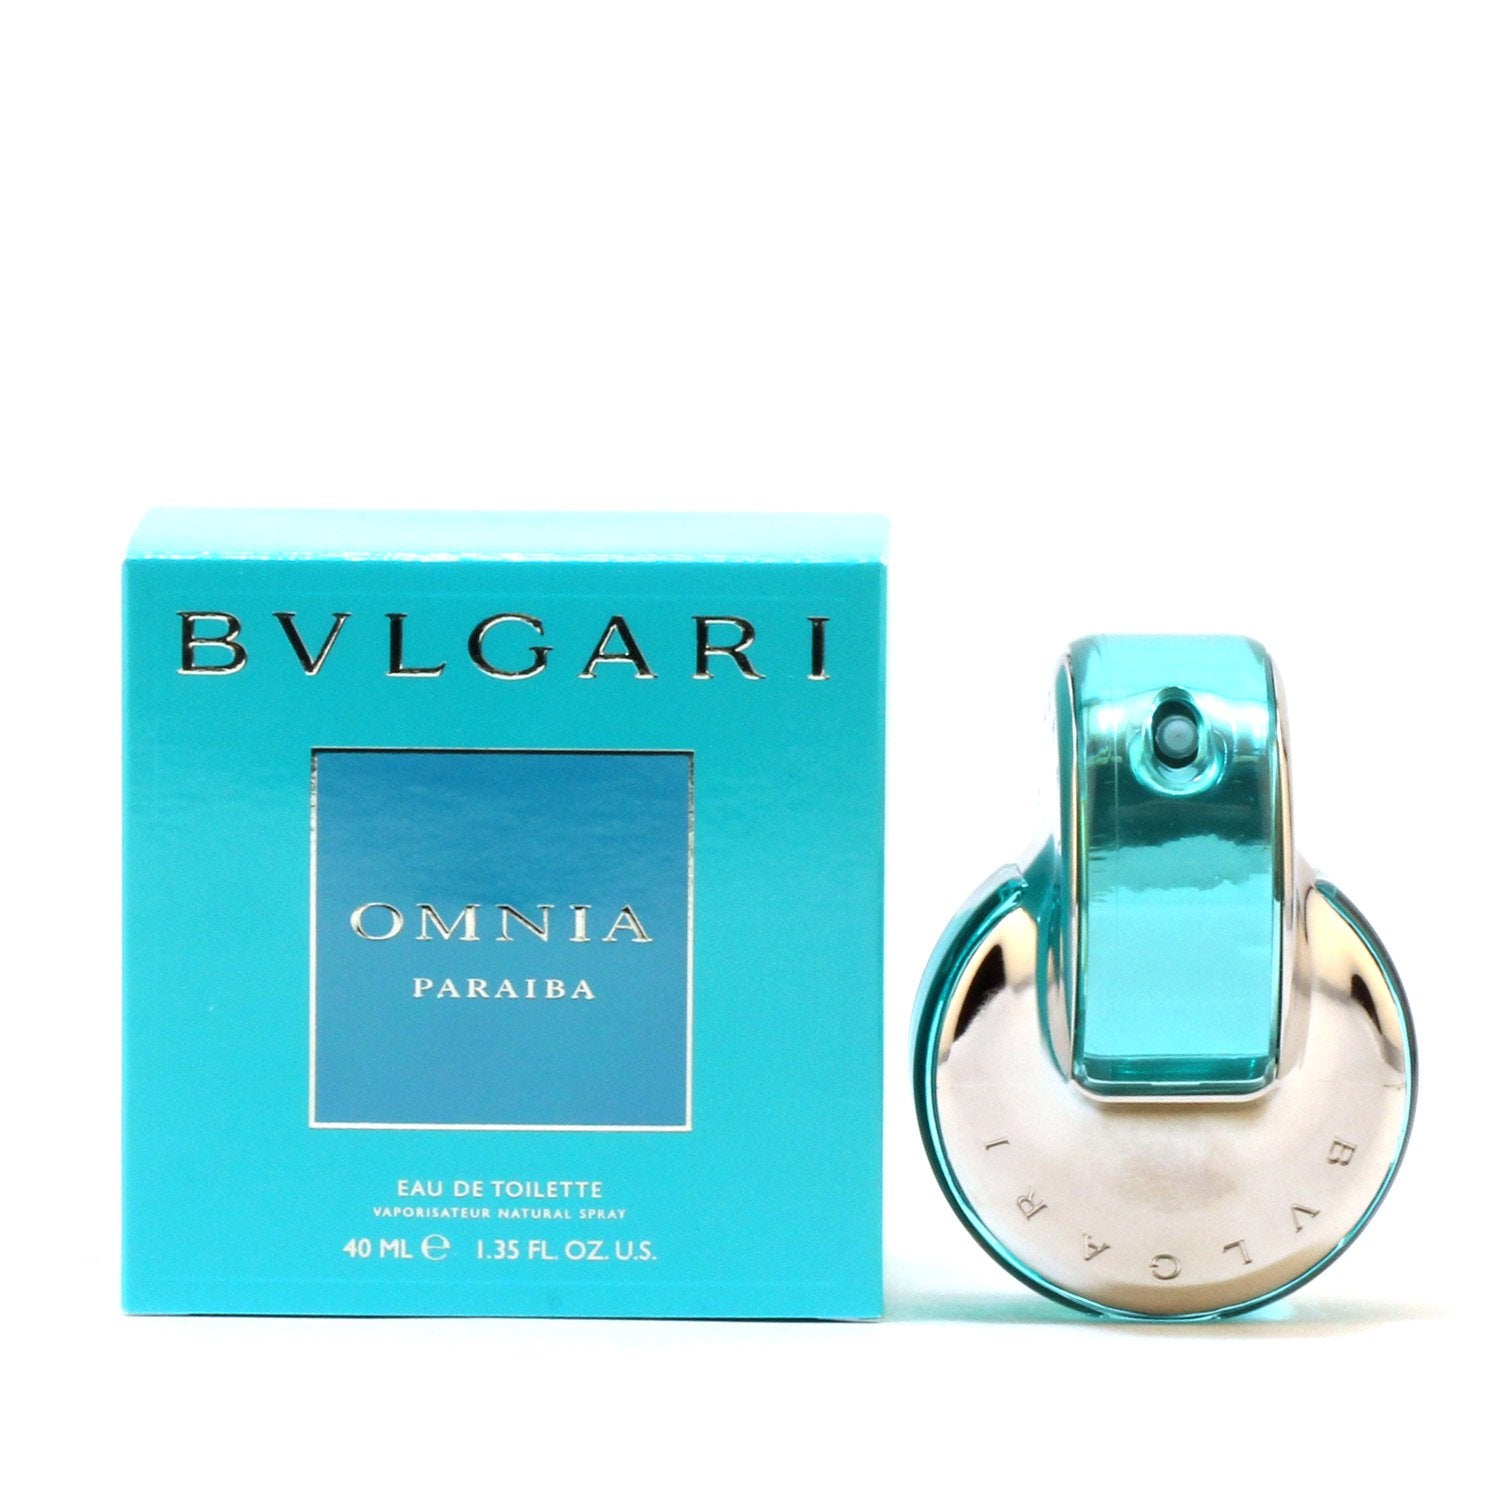 Perfume - BVLGARI OMNIA PARAIBA FOR WOMEN - EAU DE TOILETTE SPRAY